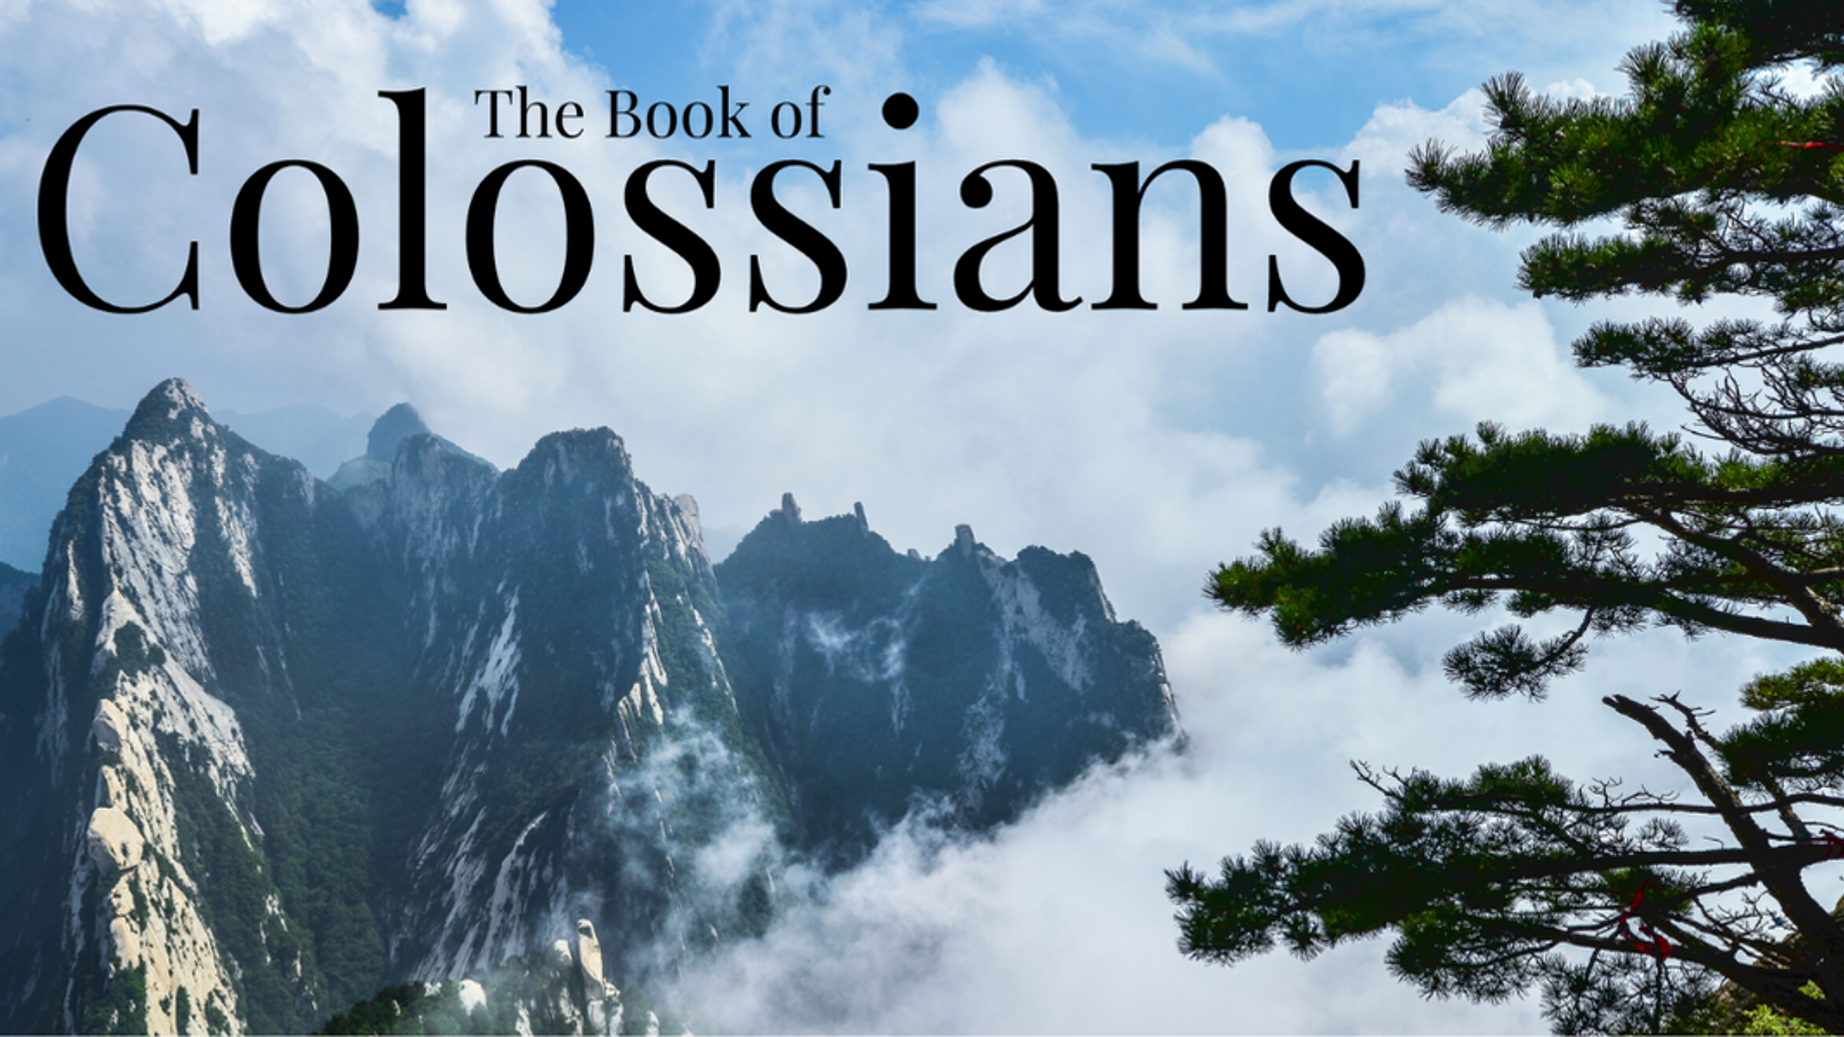 The Book of Colossians